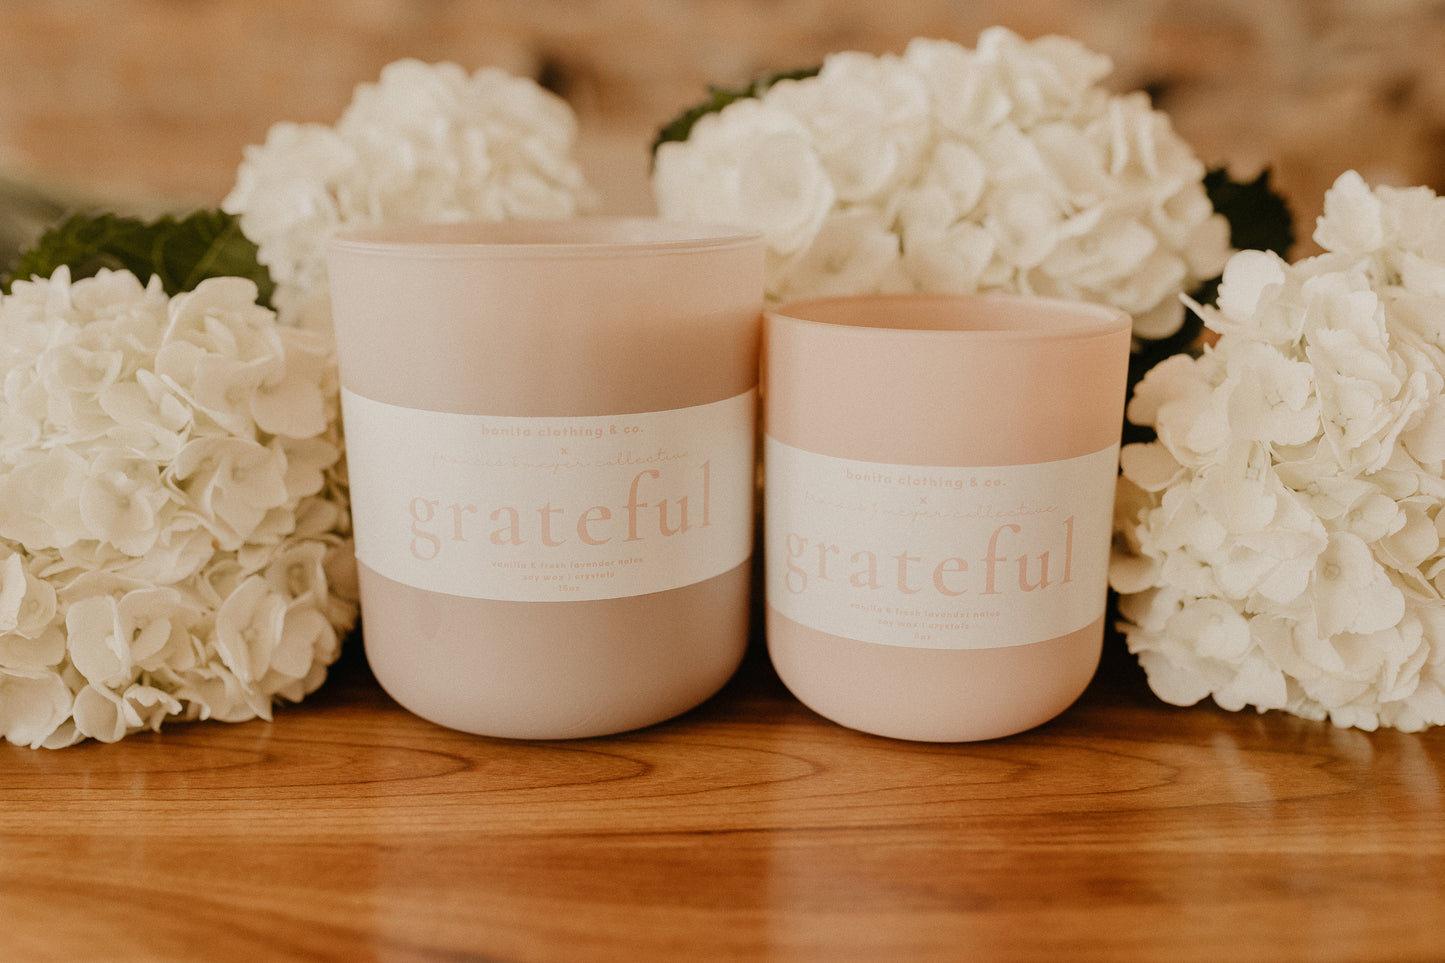 Grateful | Candle